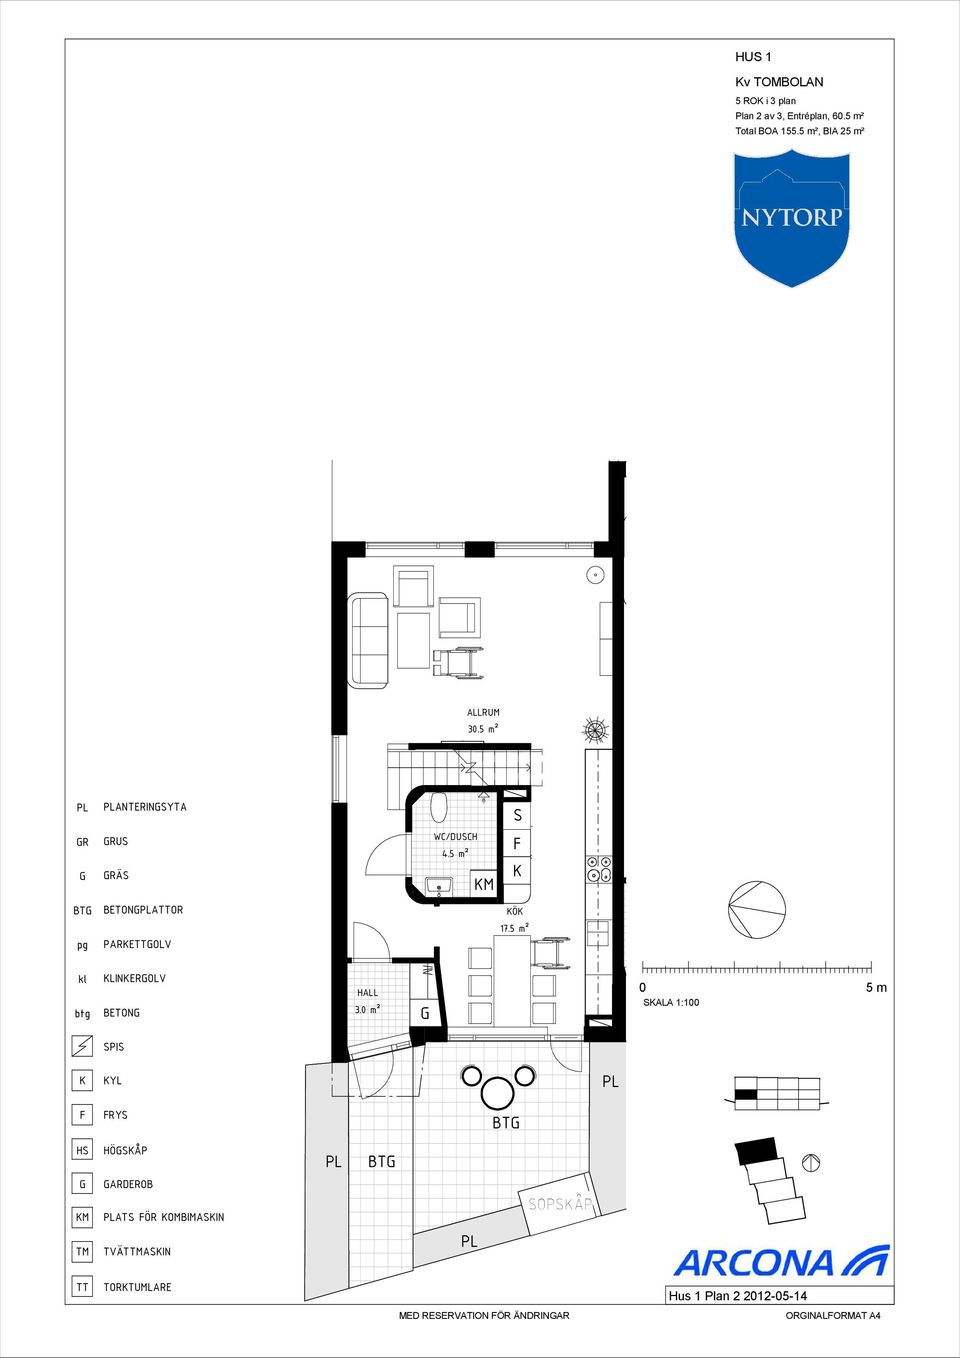 5 m² LINEROLV BETON 3.